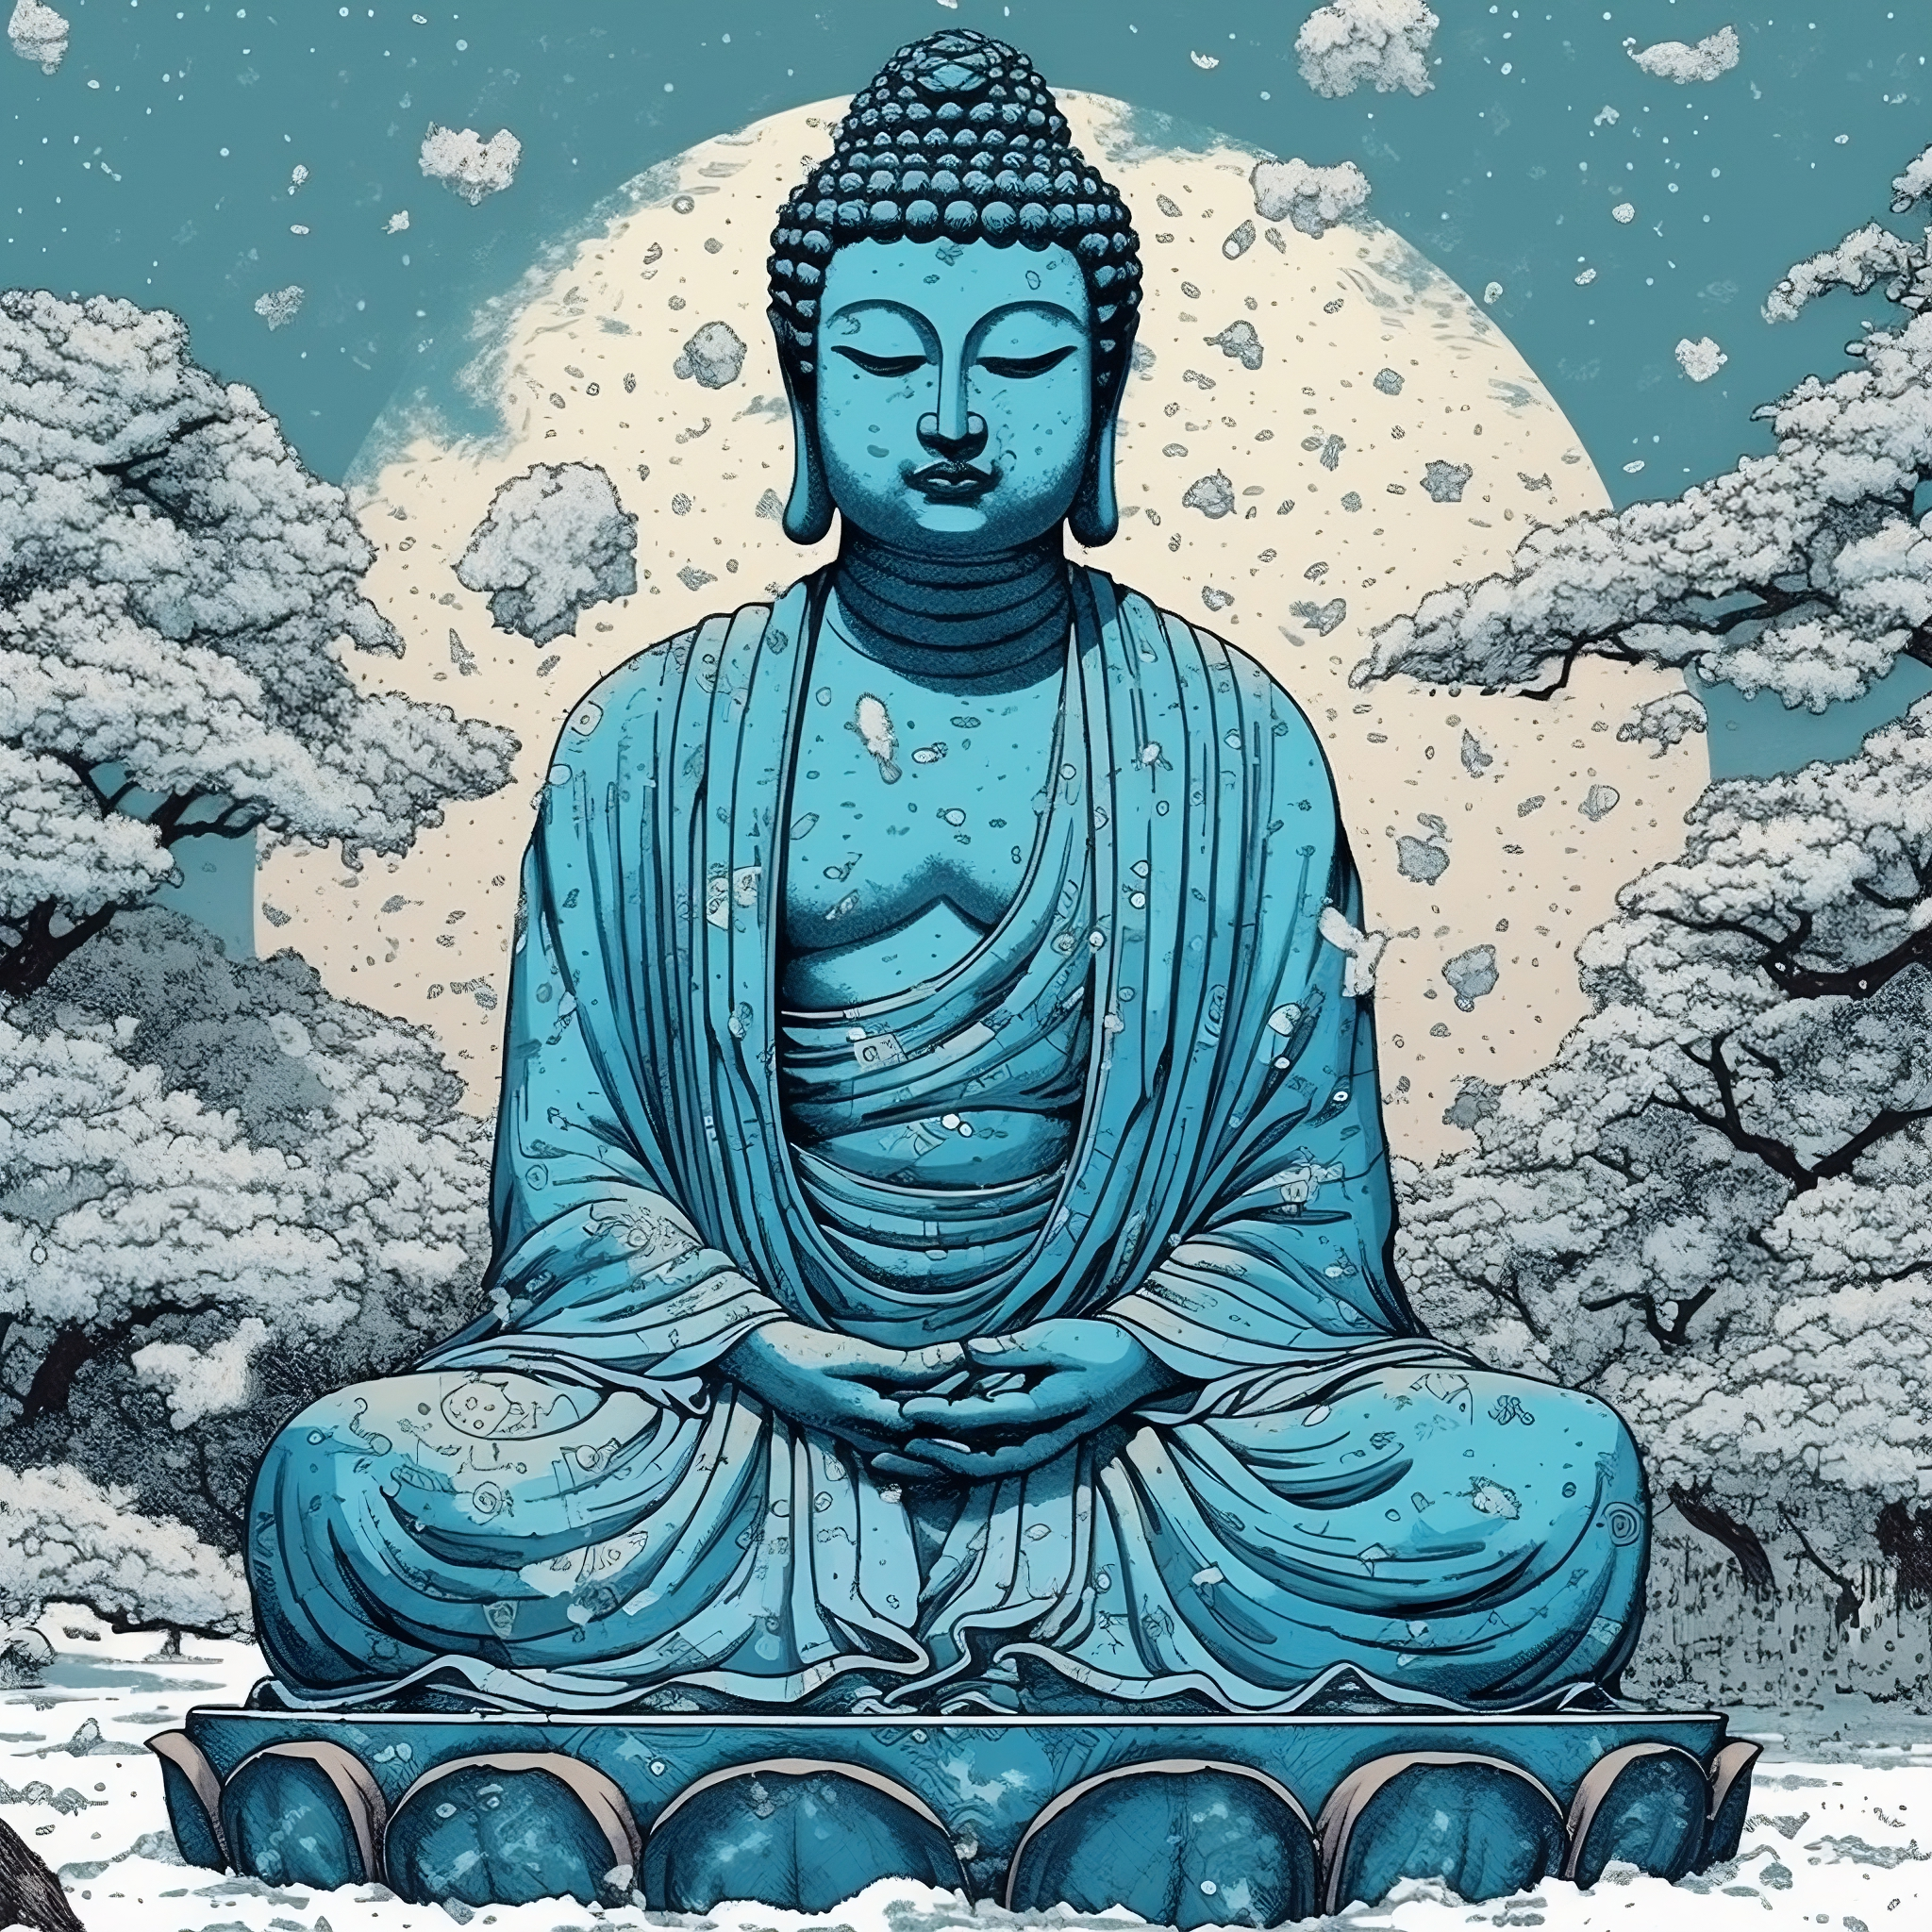 The Lord Buddha Art Print Against a Snowy Backdrop